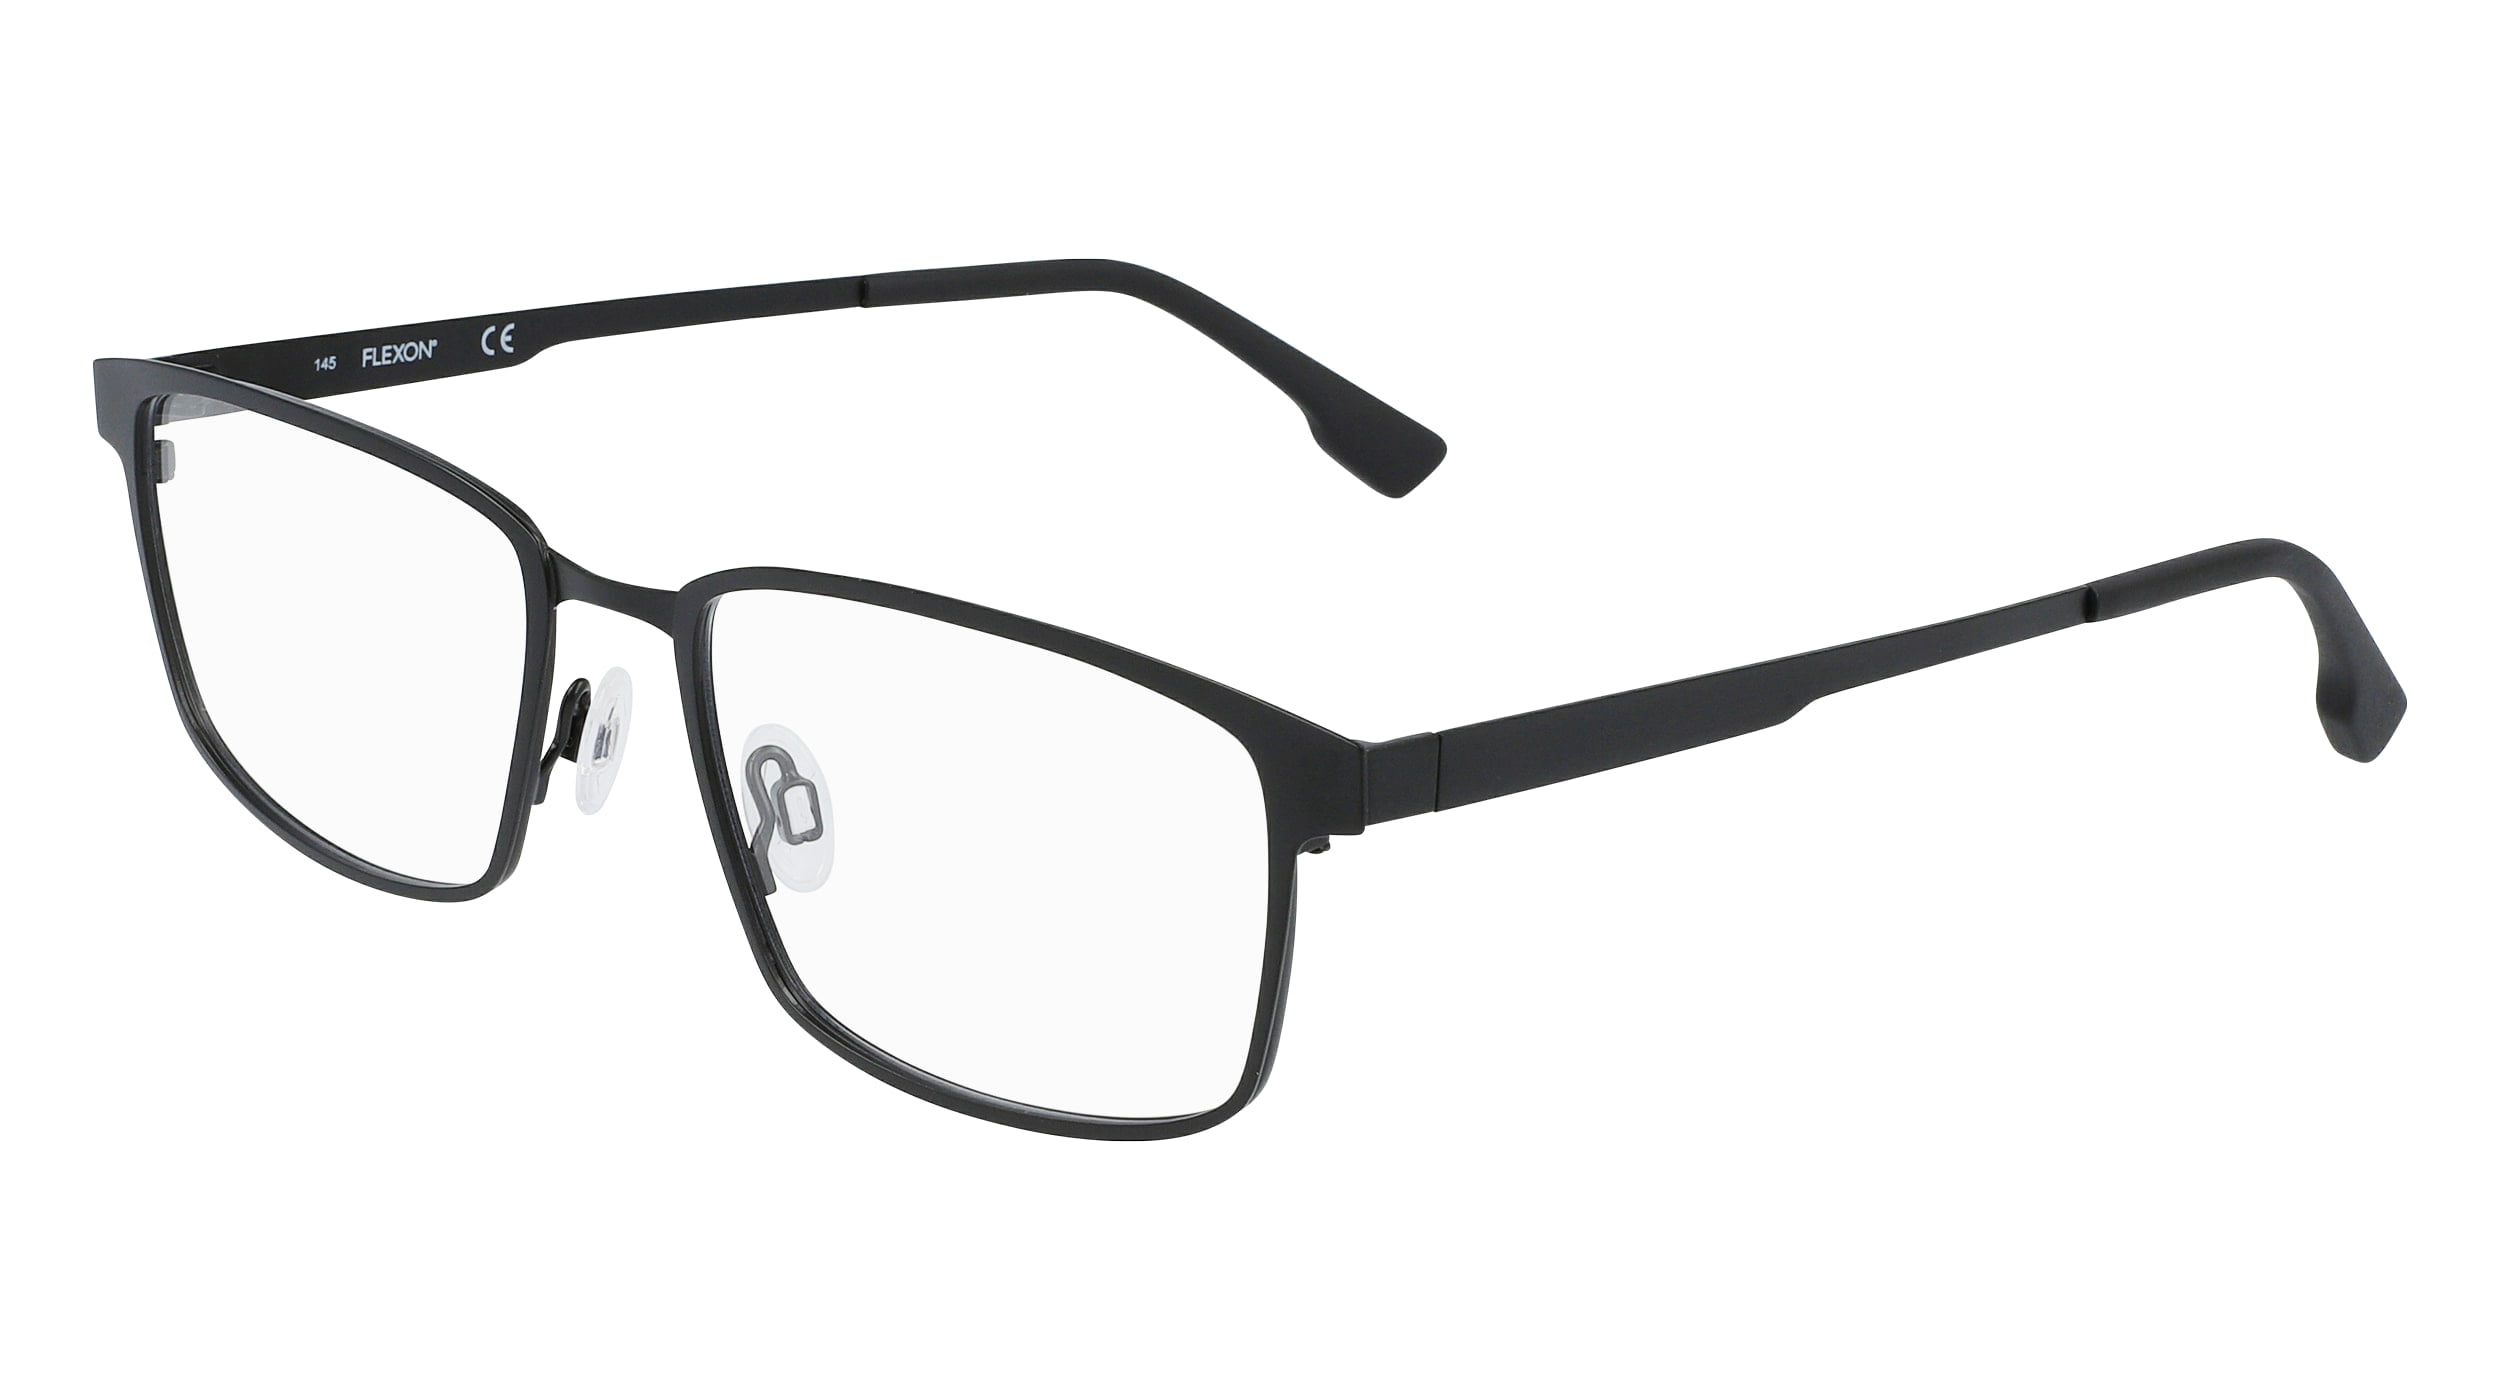 Eyeglasses FLEXON FLX 1000 MAG-SET 001 Black - Walmart.com